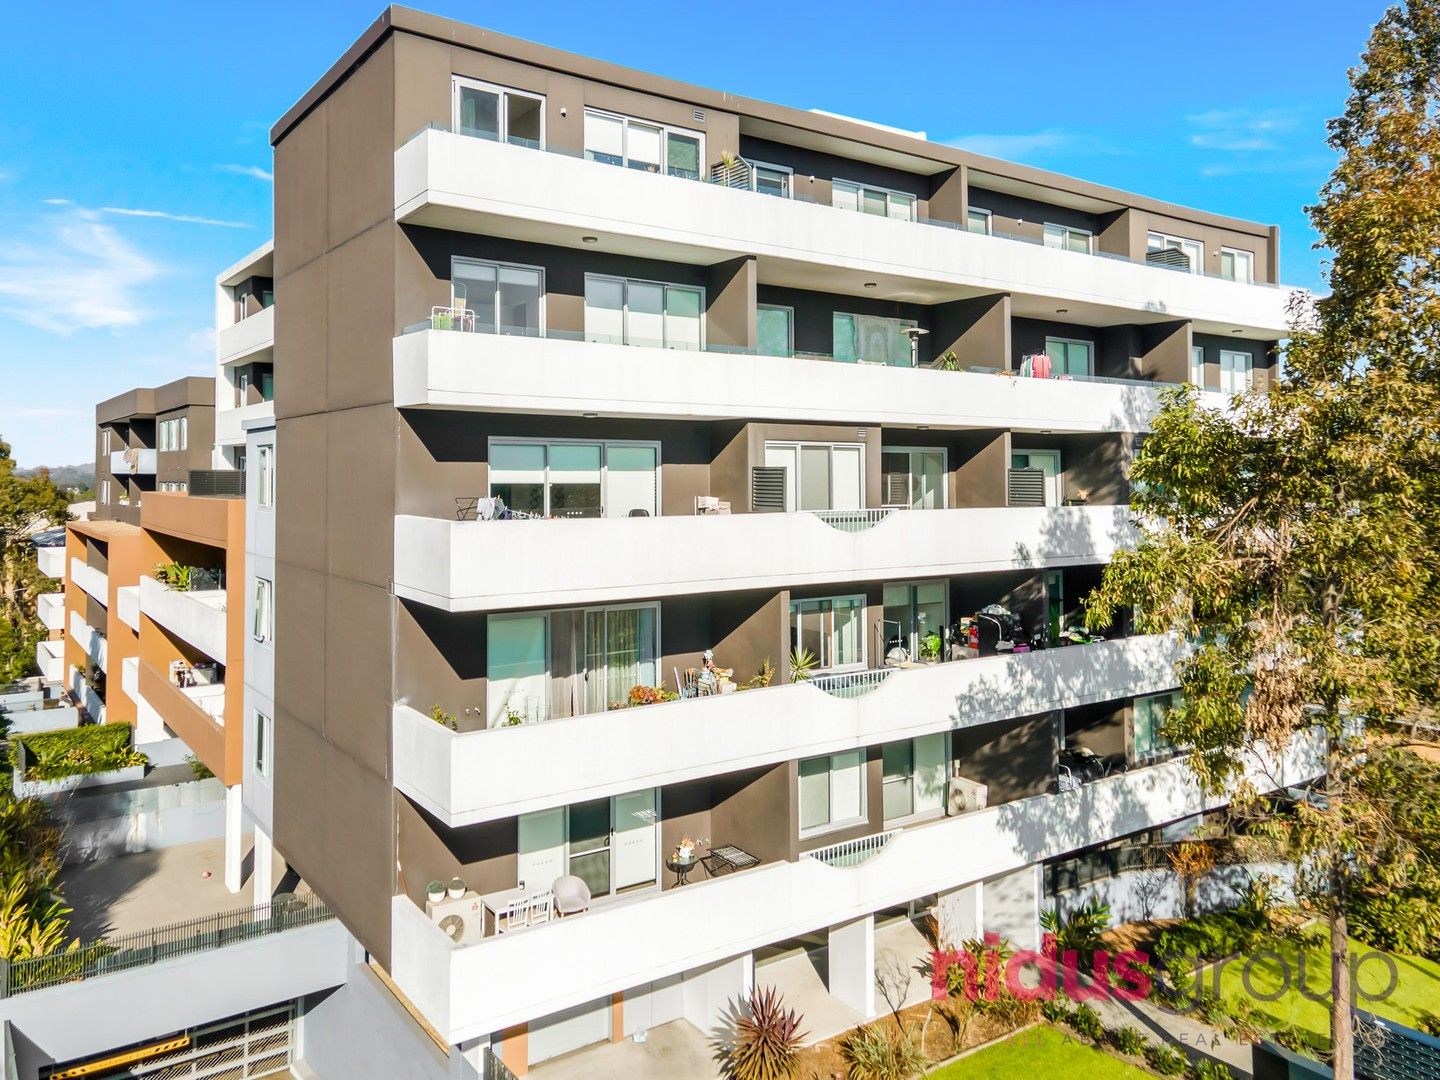 3 bedrooms Apartment / Unit / Flat in 35/5 The Avenue MOUNT DRUITT NSW, 2770